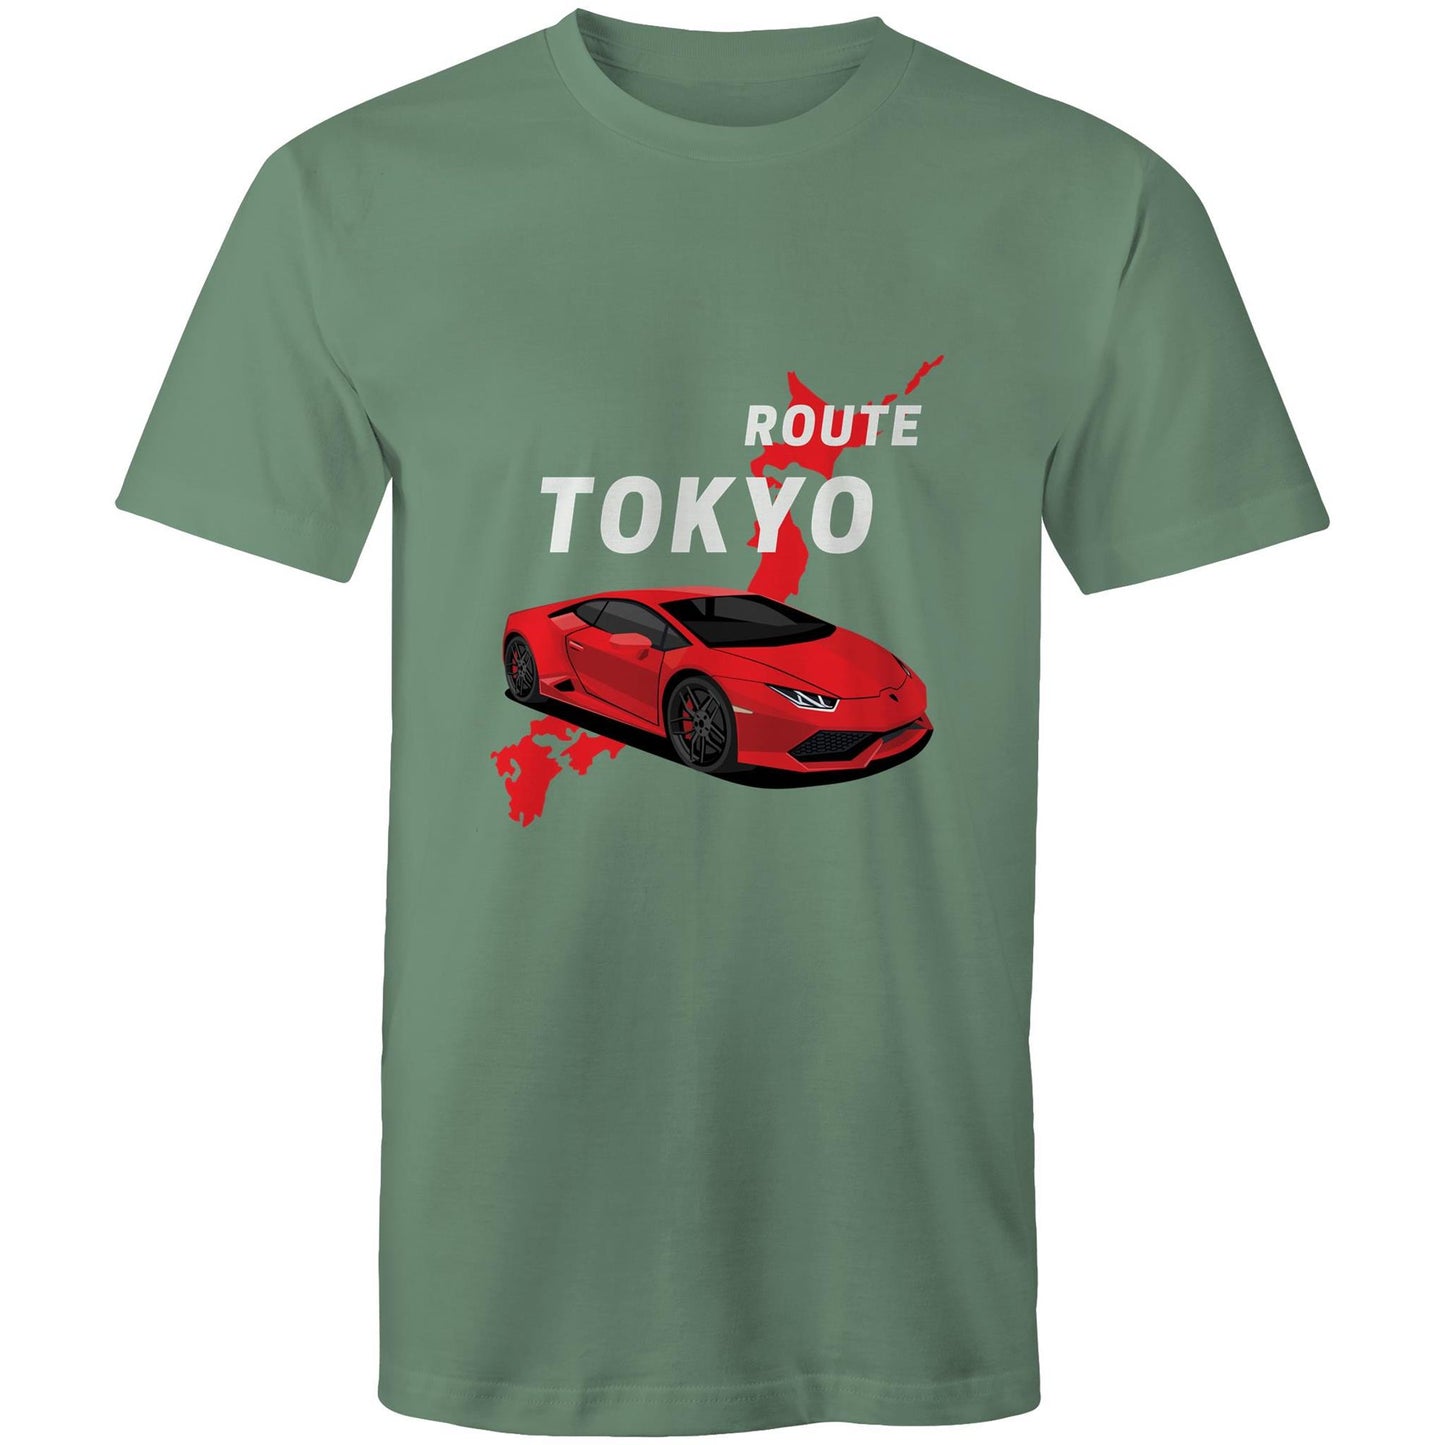 Route Tokyo - Mens T-Shirt